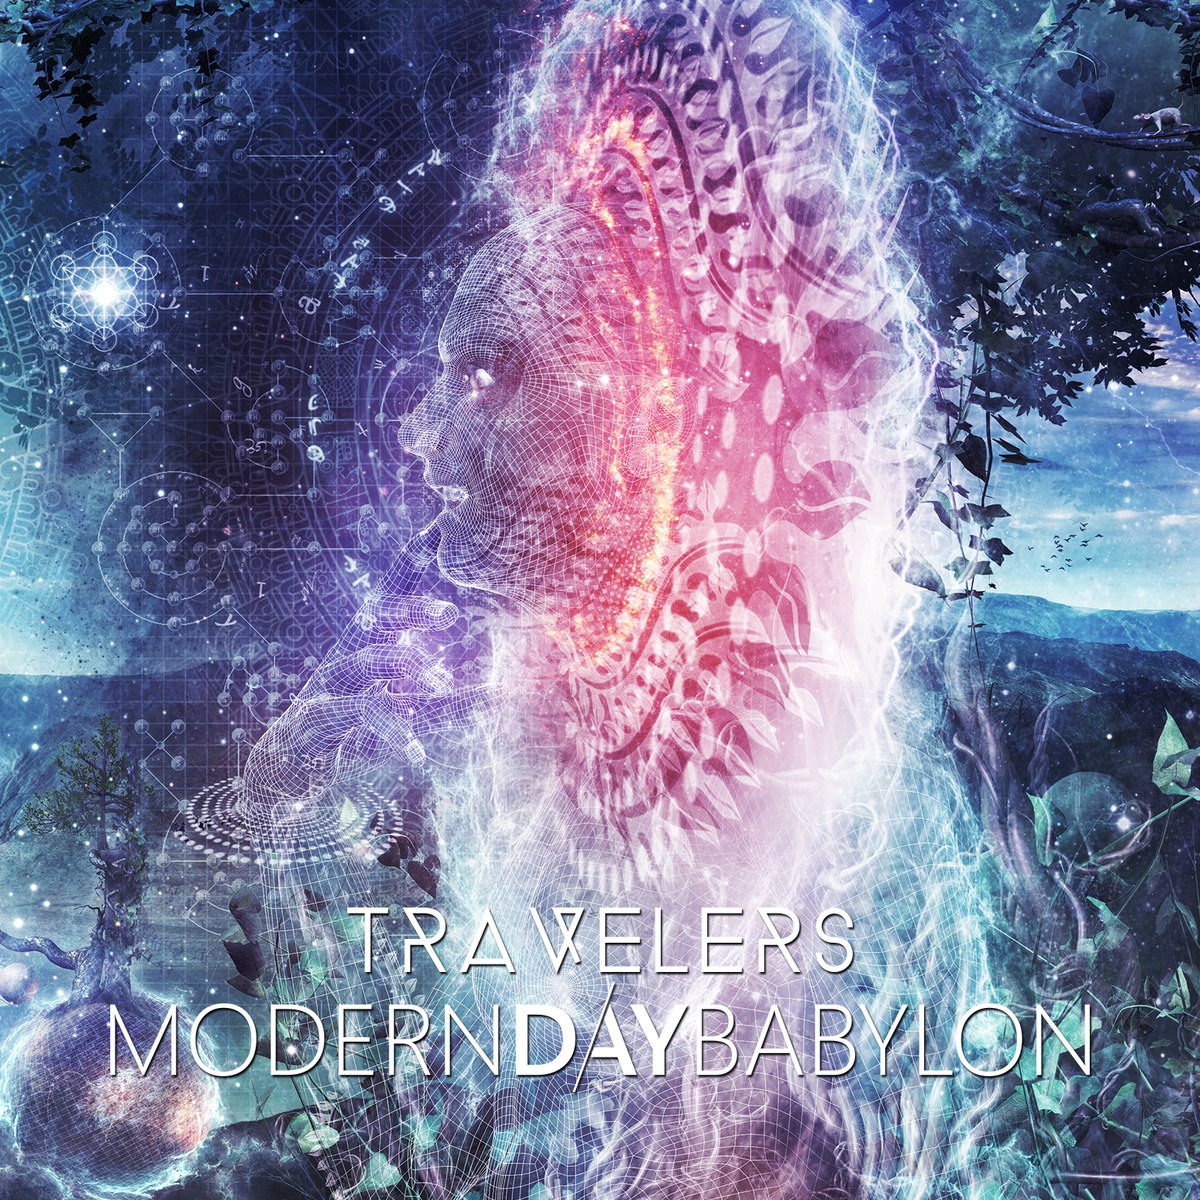 Modern Day Babylon - Travelers [EP] (2013)